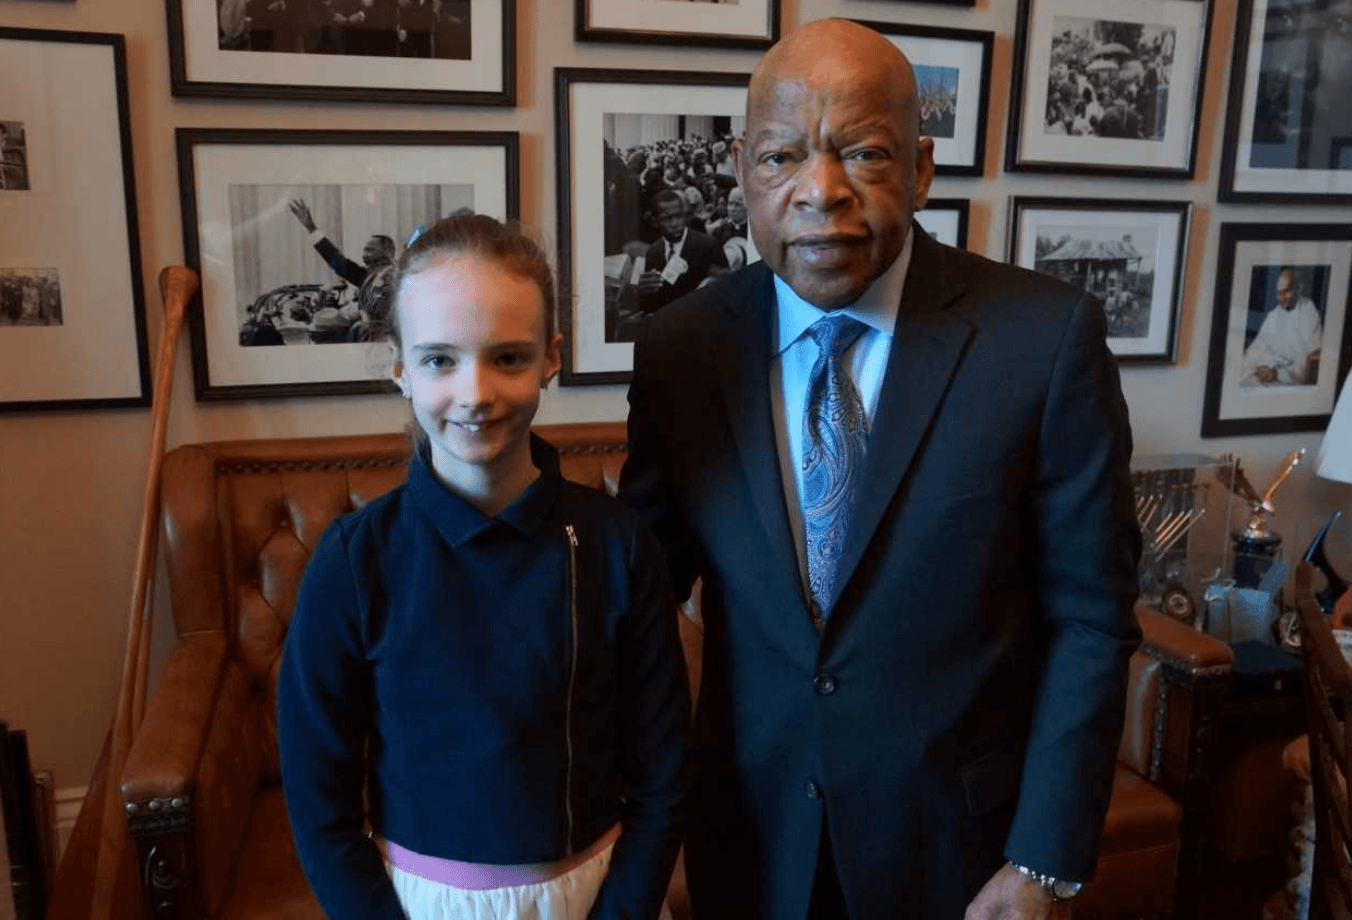  Riona McKersie with Congressman John Lewis in Washington, DC on April 13, 2018 Contributed photo